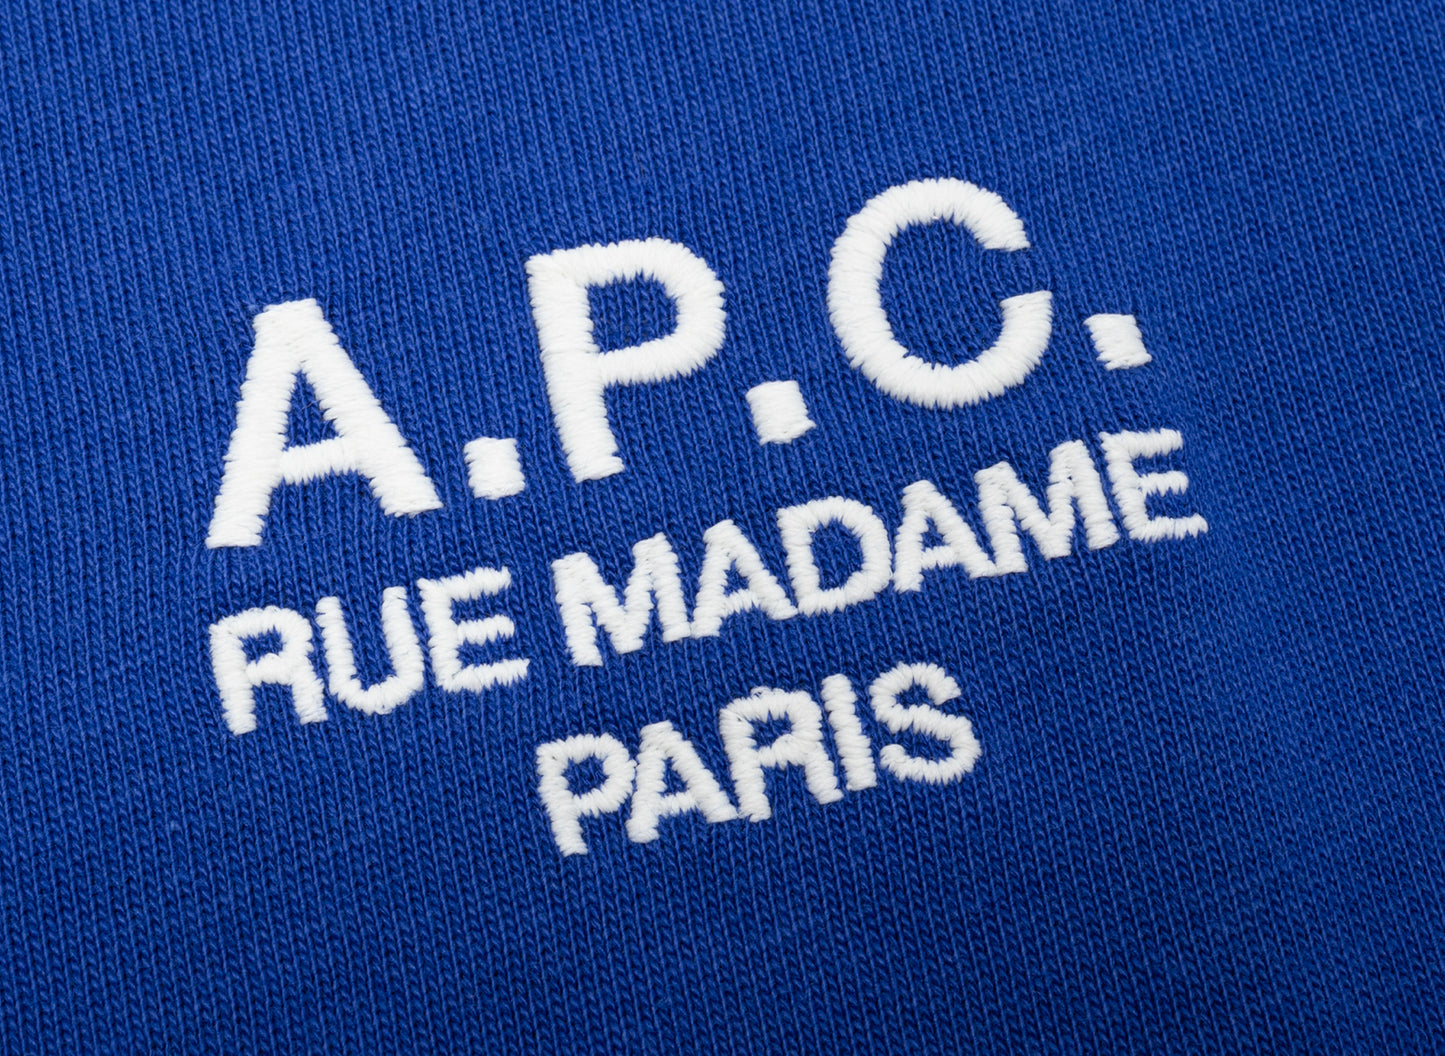 A.P.C. Raymond T-Shirt in Blue xld